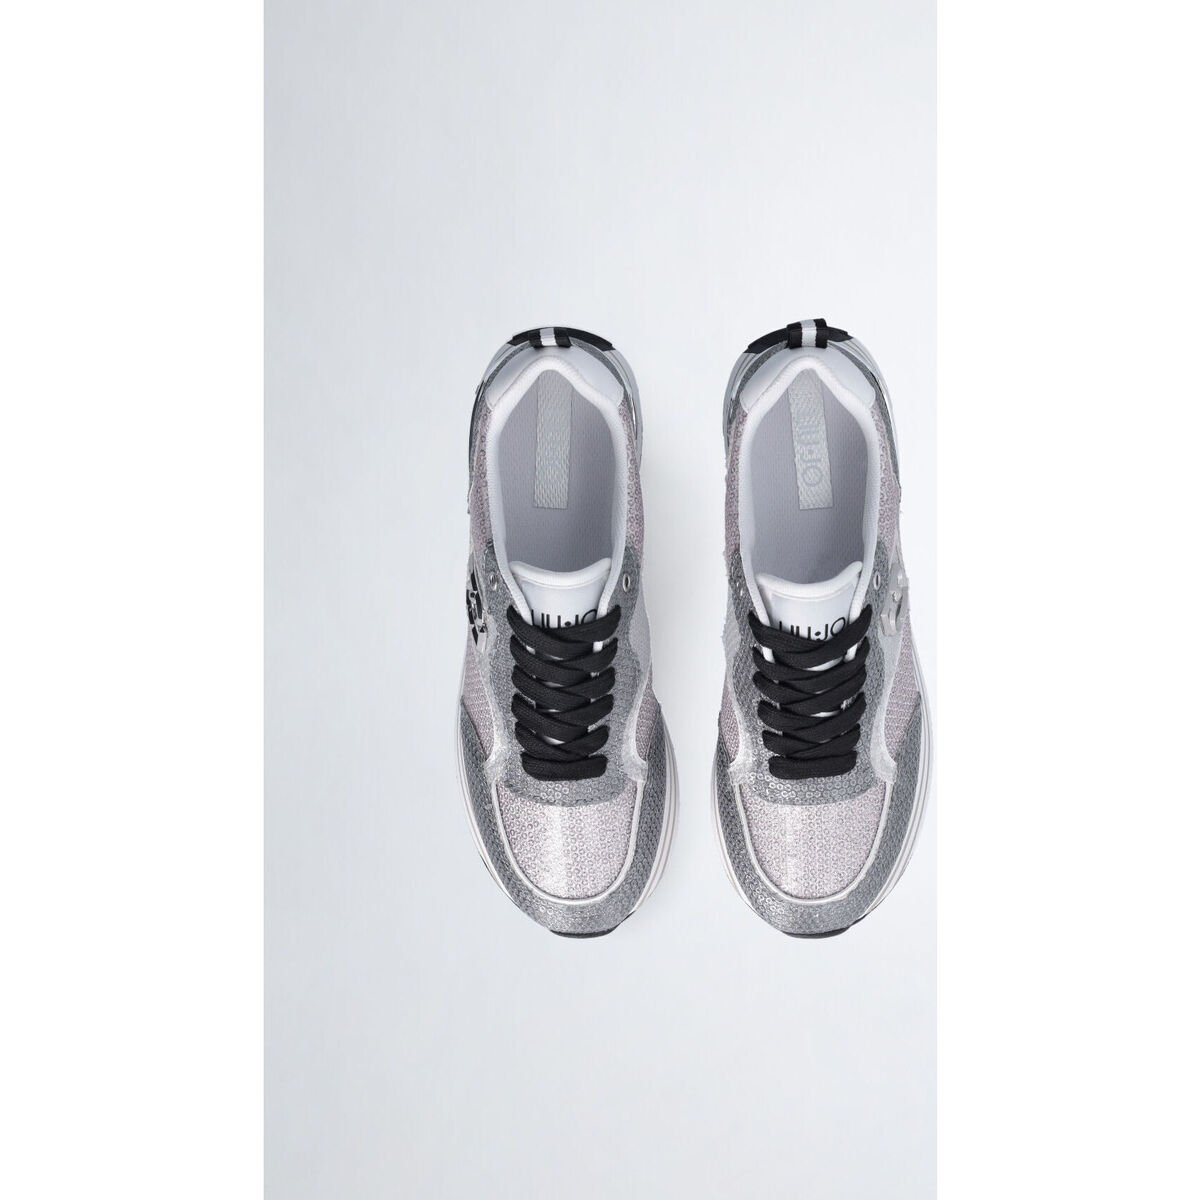 Liu Jo Argenté Sneakers plateforme avec paillettes glitter k1TYTfYo